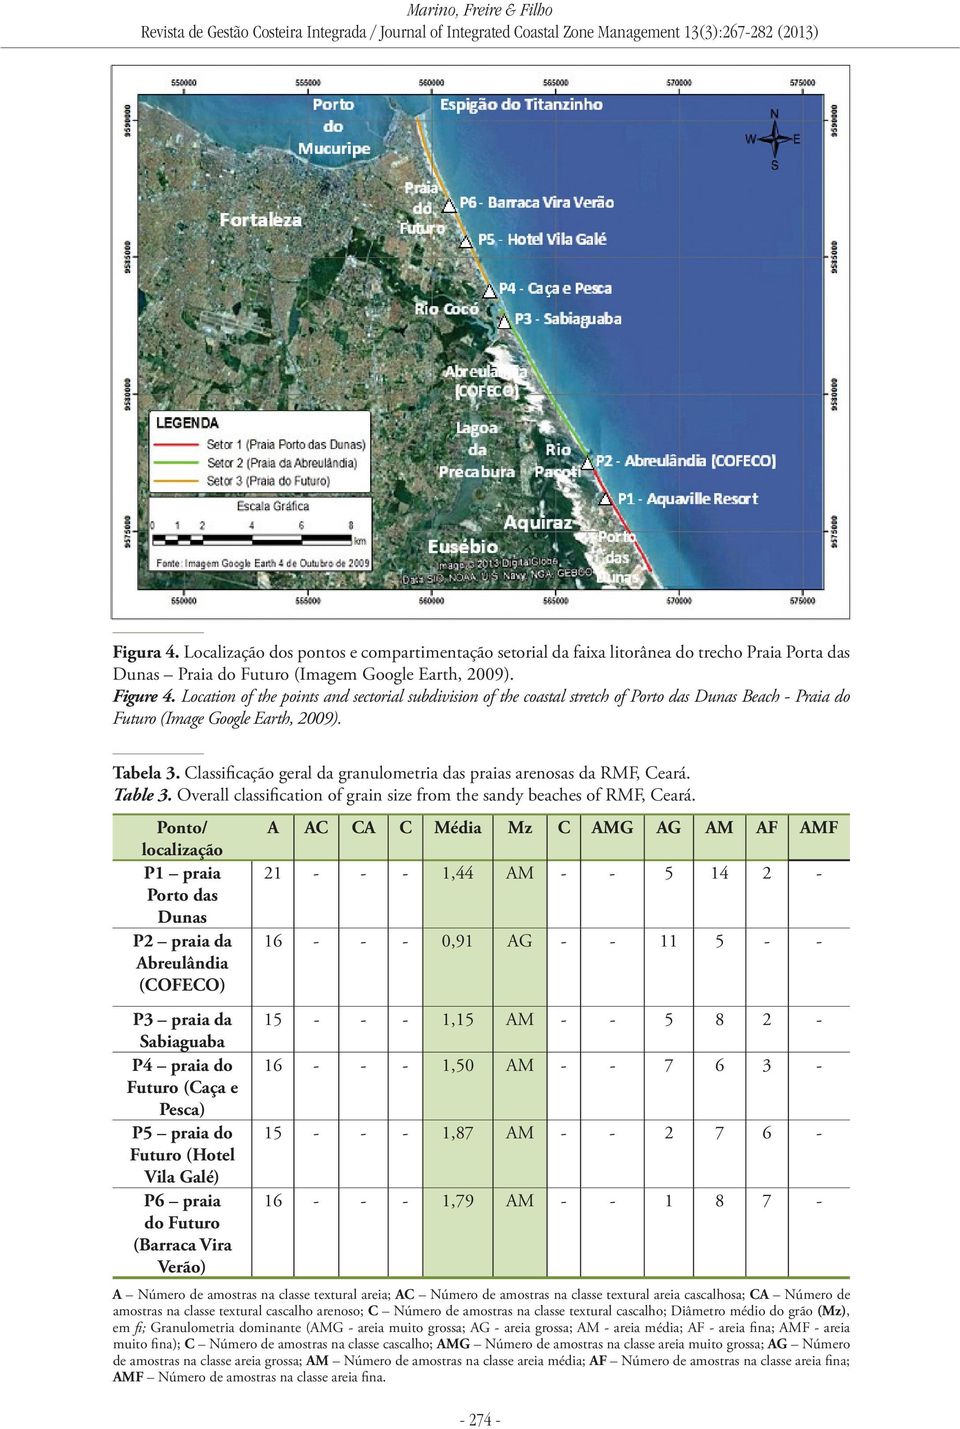 Classificação geral da granulometria das praias arenosas da RMF, Ceará. Table 3. Overall classification of grain size from the sandy beaches of RMF, Ceará.